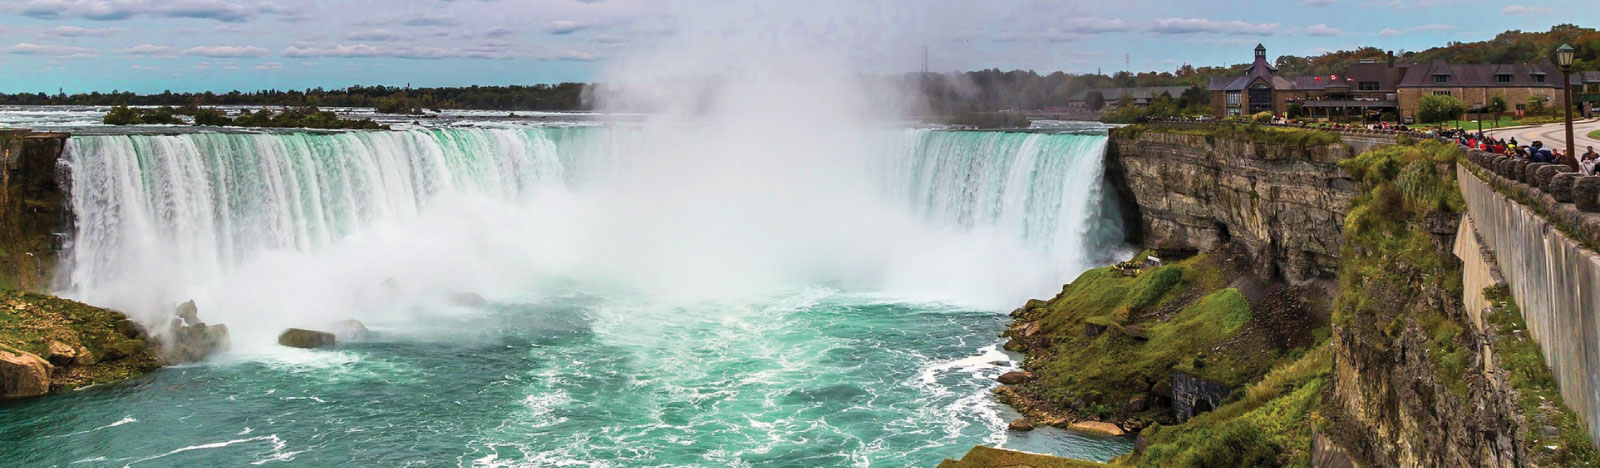 Attractions Niagara Falls Valentine's Day